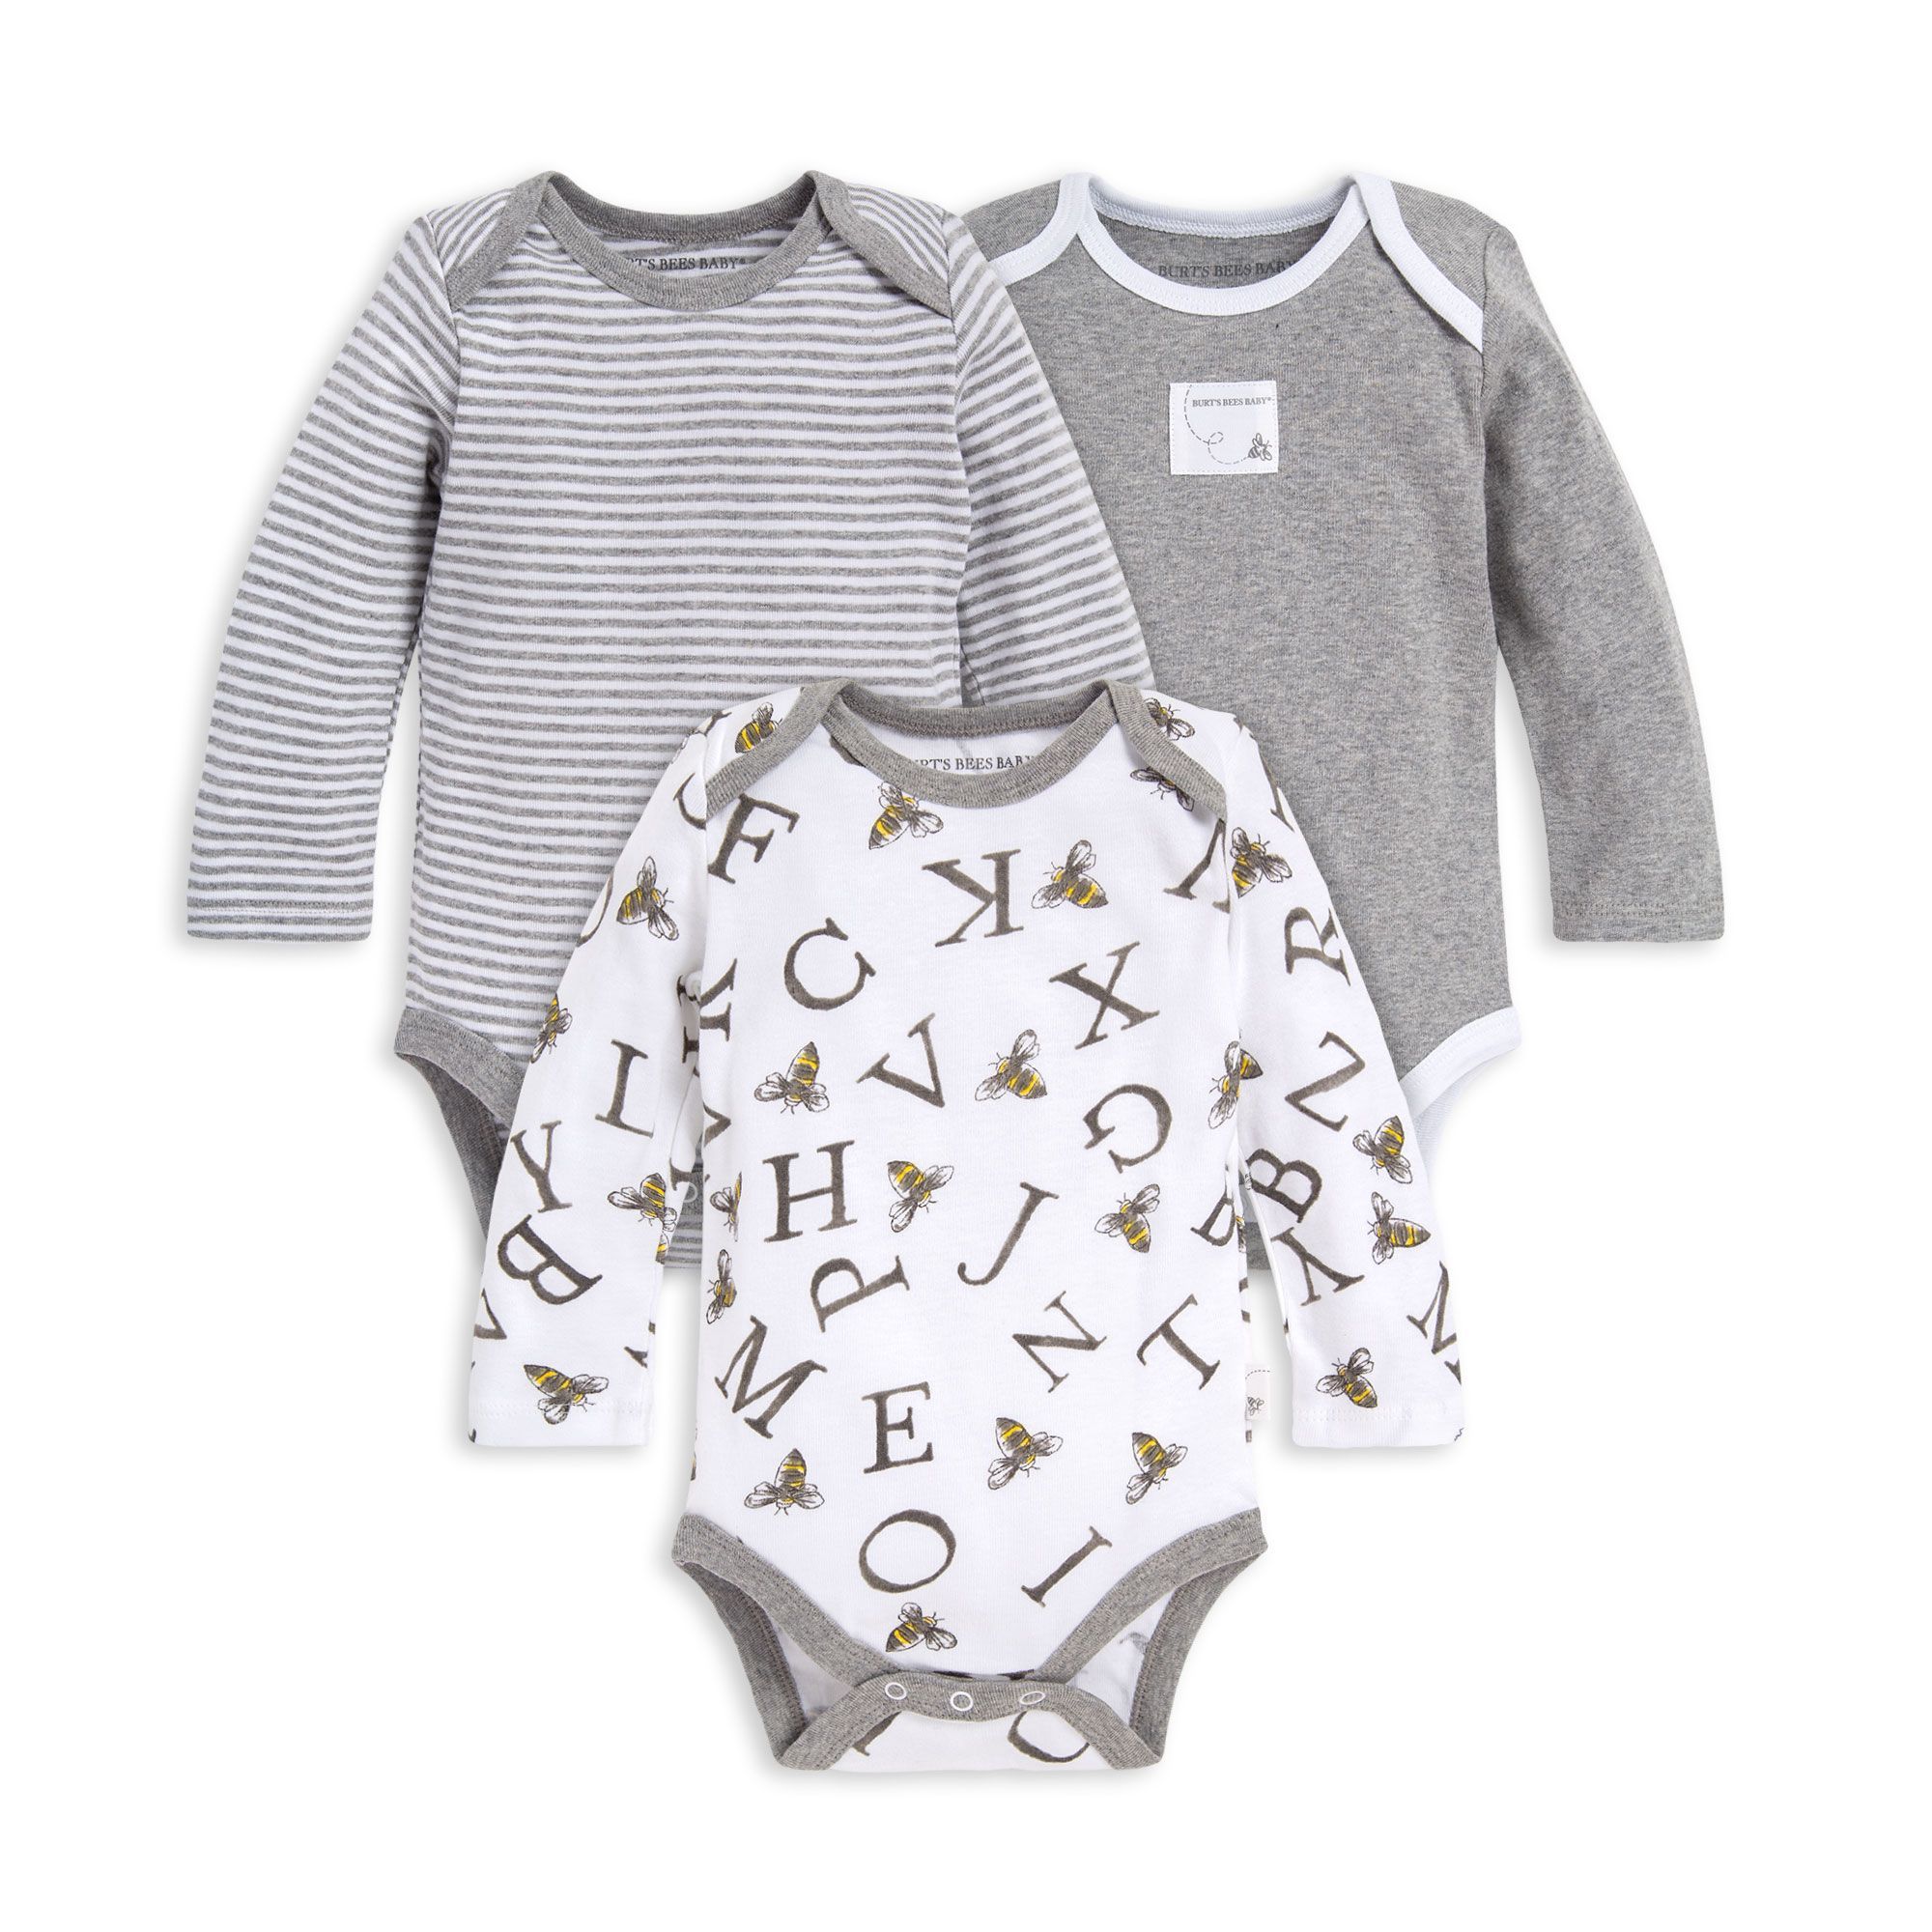 newborn baby clothes sale uk